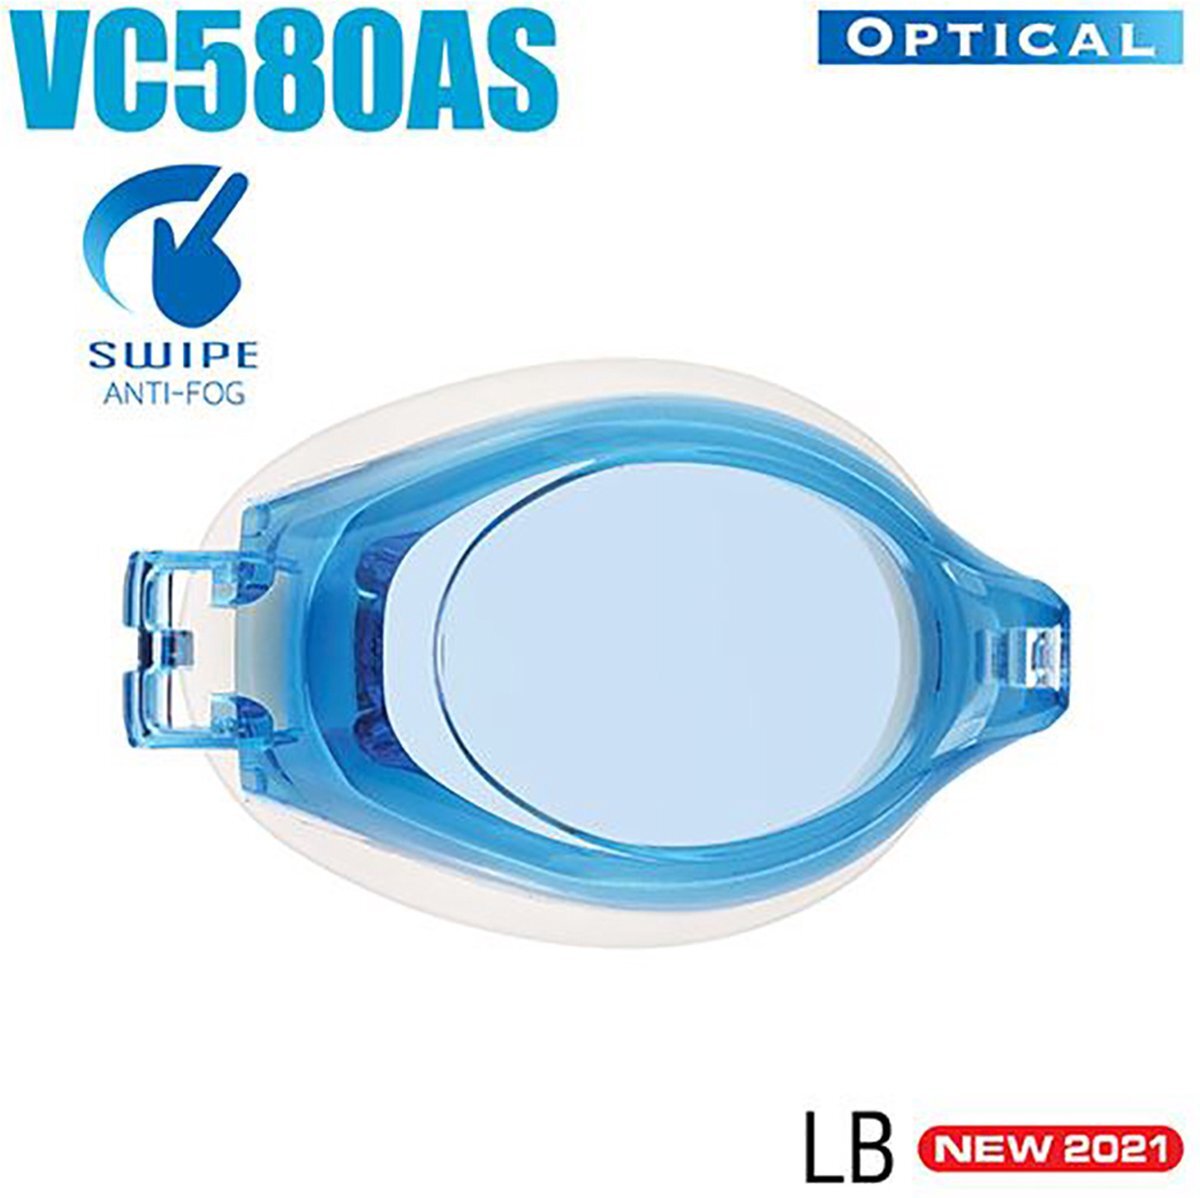 View zwembril lens met SWIPE technologie VC580AS Sterkte +6.0 kleur blauw